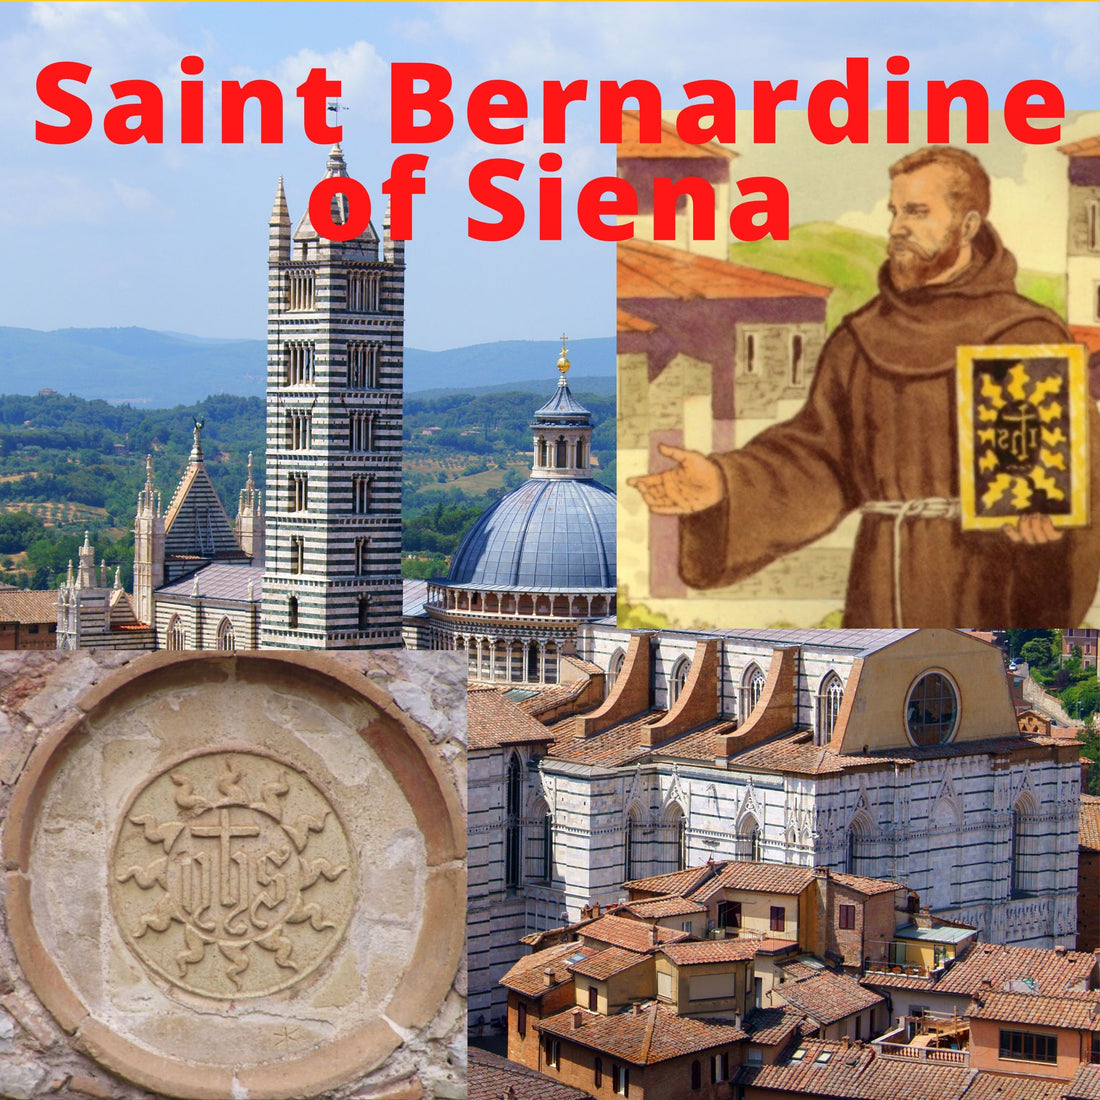 Saint Bernardine of Siena